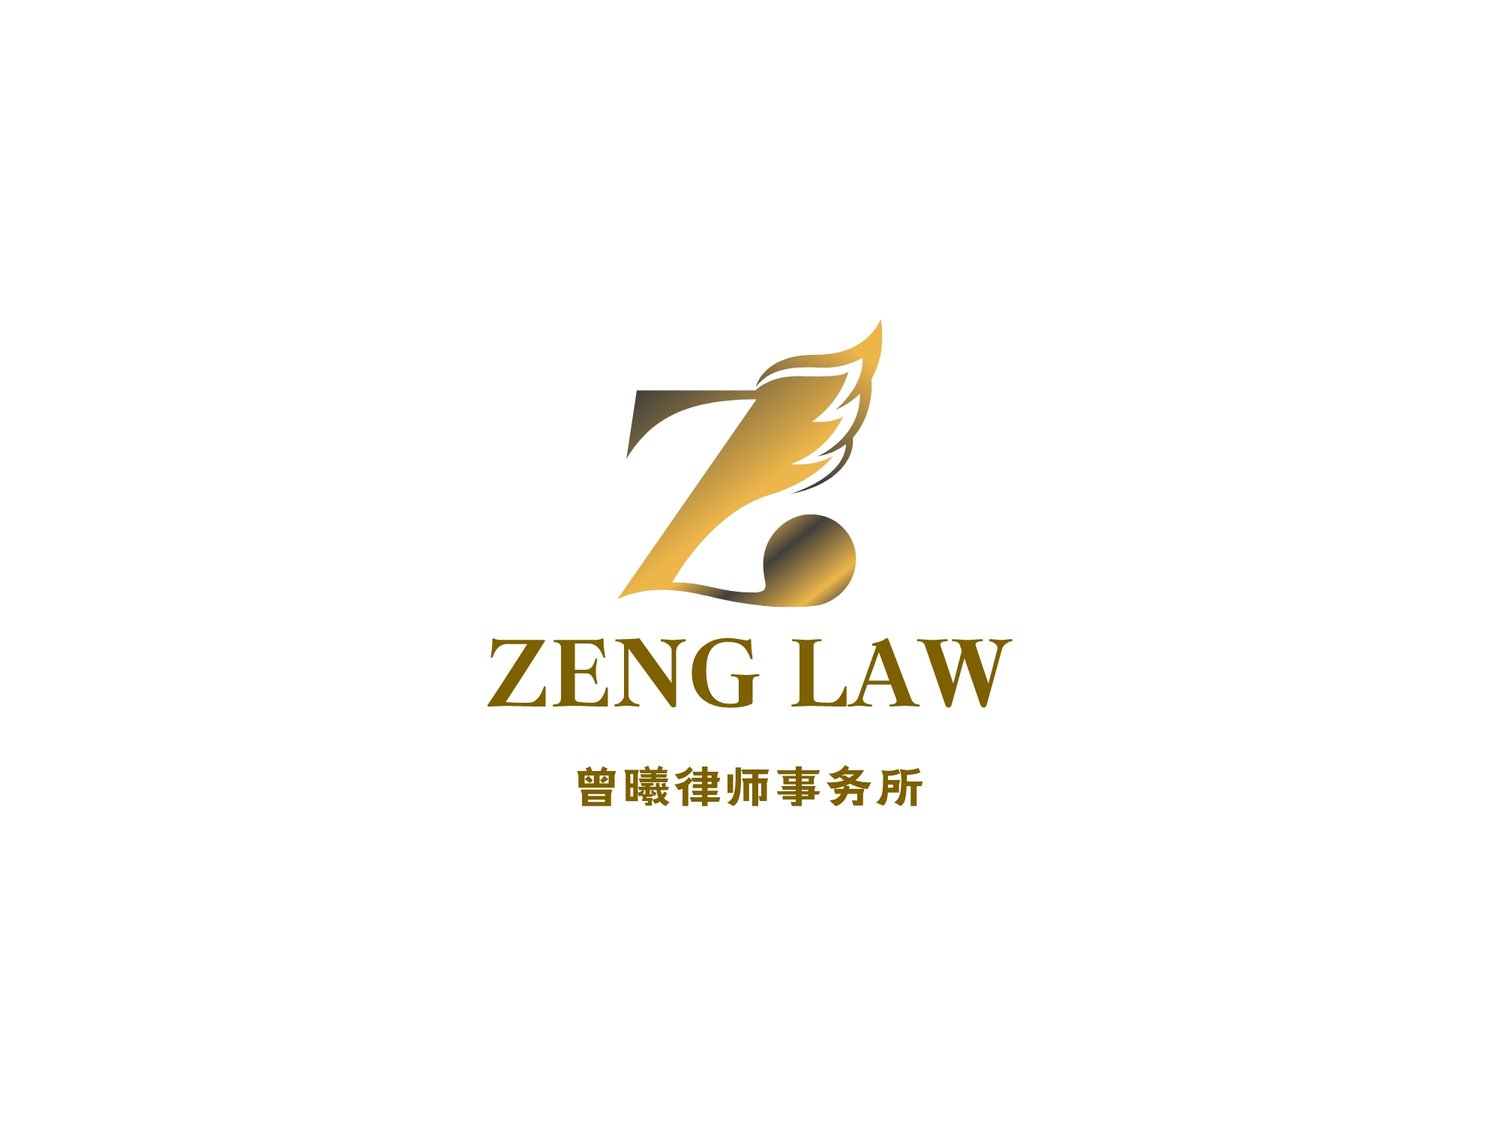 Zeng Law Professional Corporation